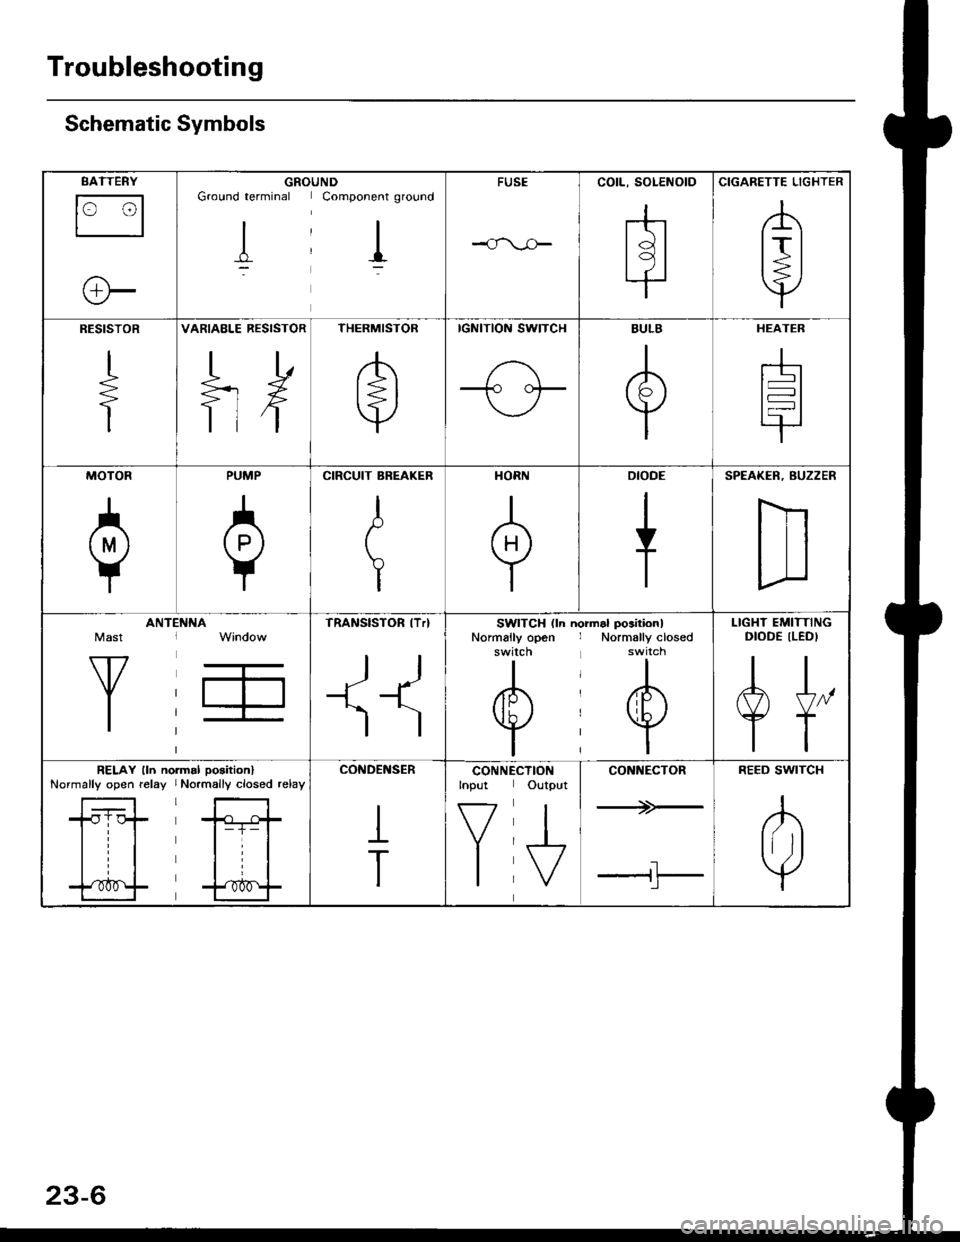 HONDA CIVIC 1998 6.G Workshop Manual Troubleshooting
Schematic Symbols
BATTERY
E
@
GROGroLrnd terminal
II_d:
UNDComponent ground
II_..-
FUSE
--cn-.e
COIL, SOLENOID
r{r
tql|
CIGARETTE LIGHTER
A
lrl
P
RESISTOR
I
f
VARIAELE RESISTOR
ilH
T